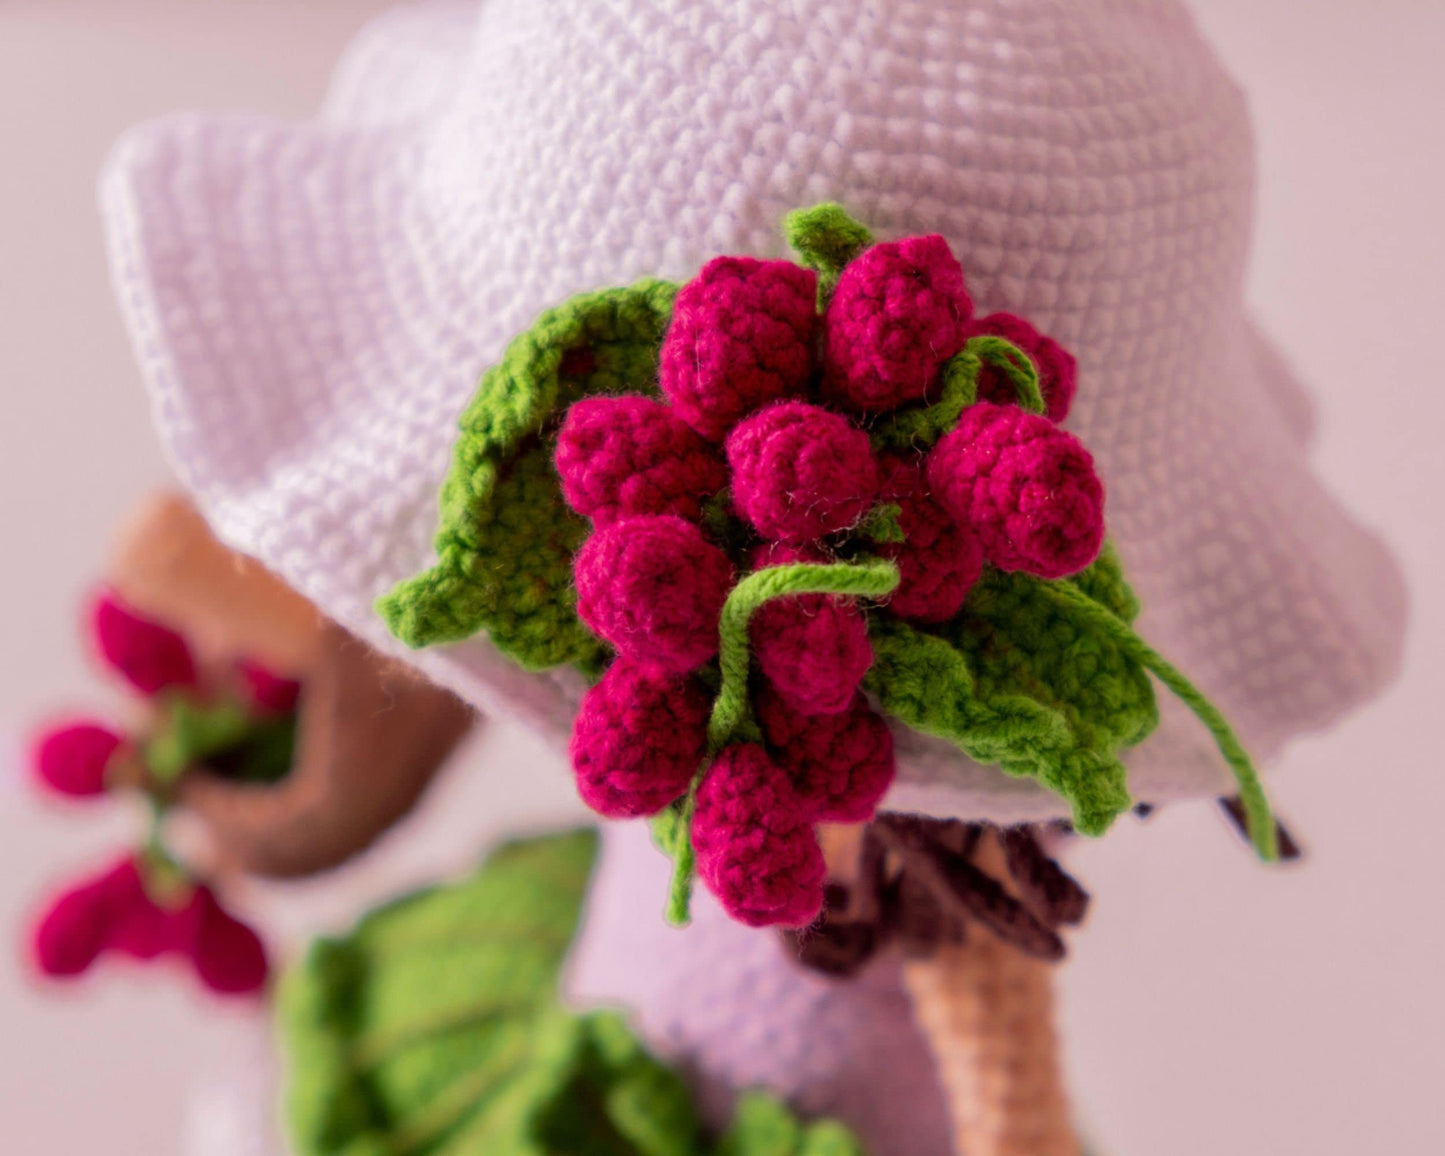 Cute Crochet Doll Raspberry Summer Dress, Pretty Amigurumi Raspberry White Green Hat Basket Doll